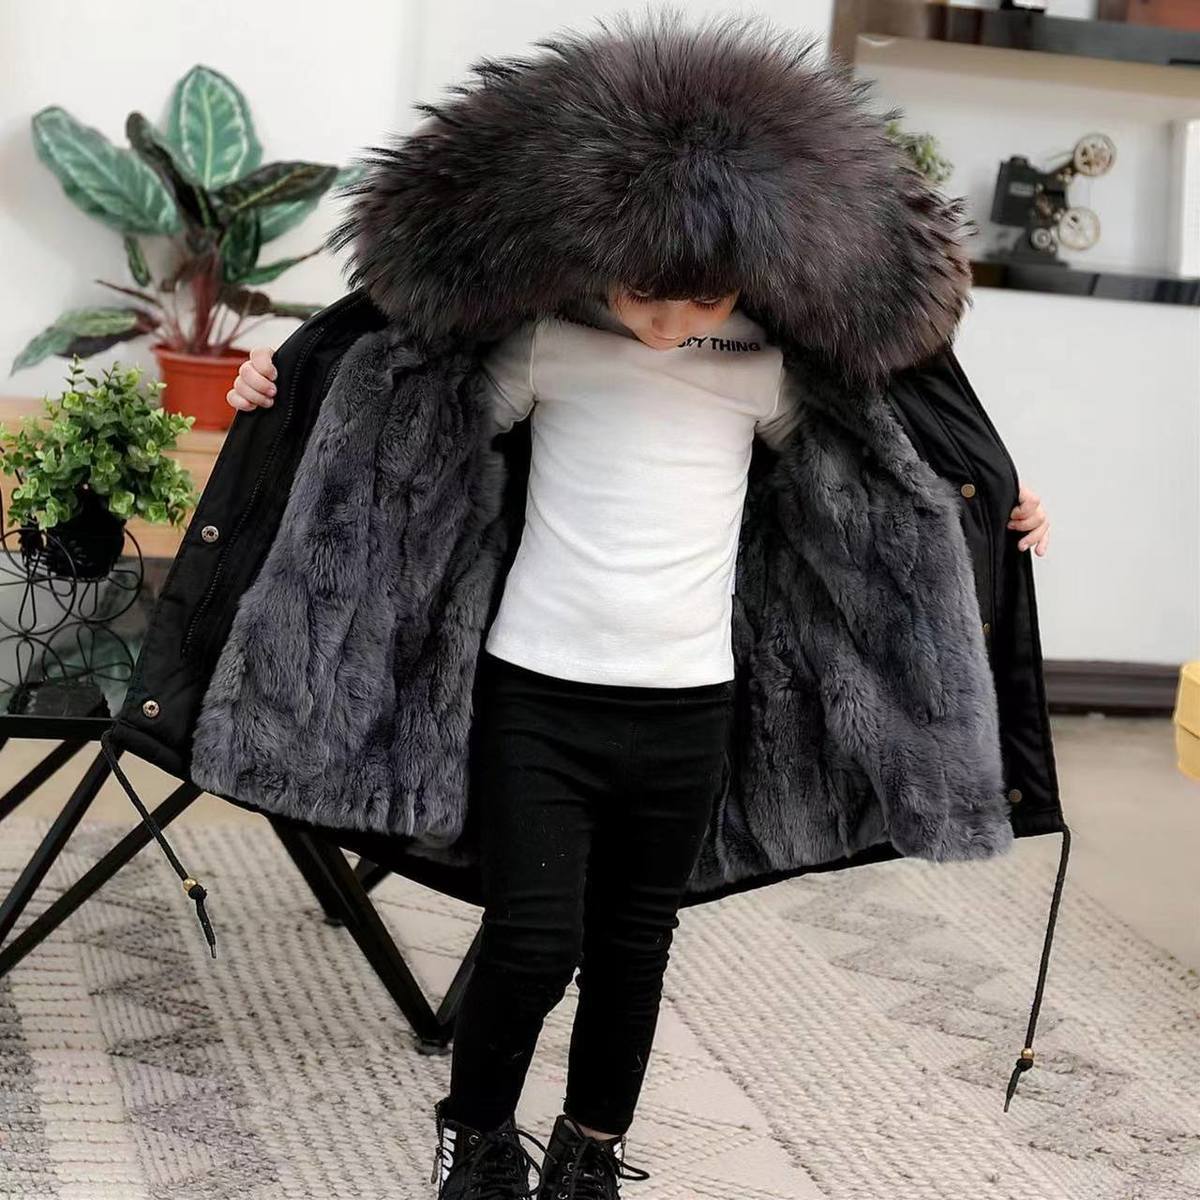 2021 New Winter Children's Rex Rabbit Fur Coat Girls Boys Little Boys Foreign Style Big Fur Collar Pie Overcoat